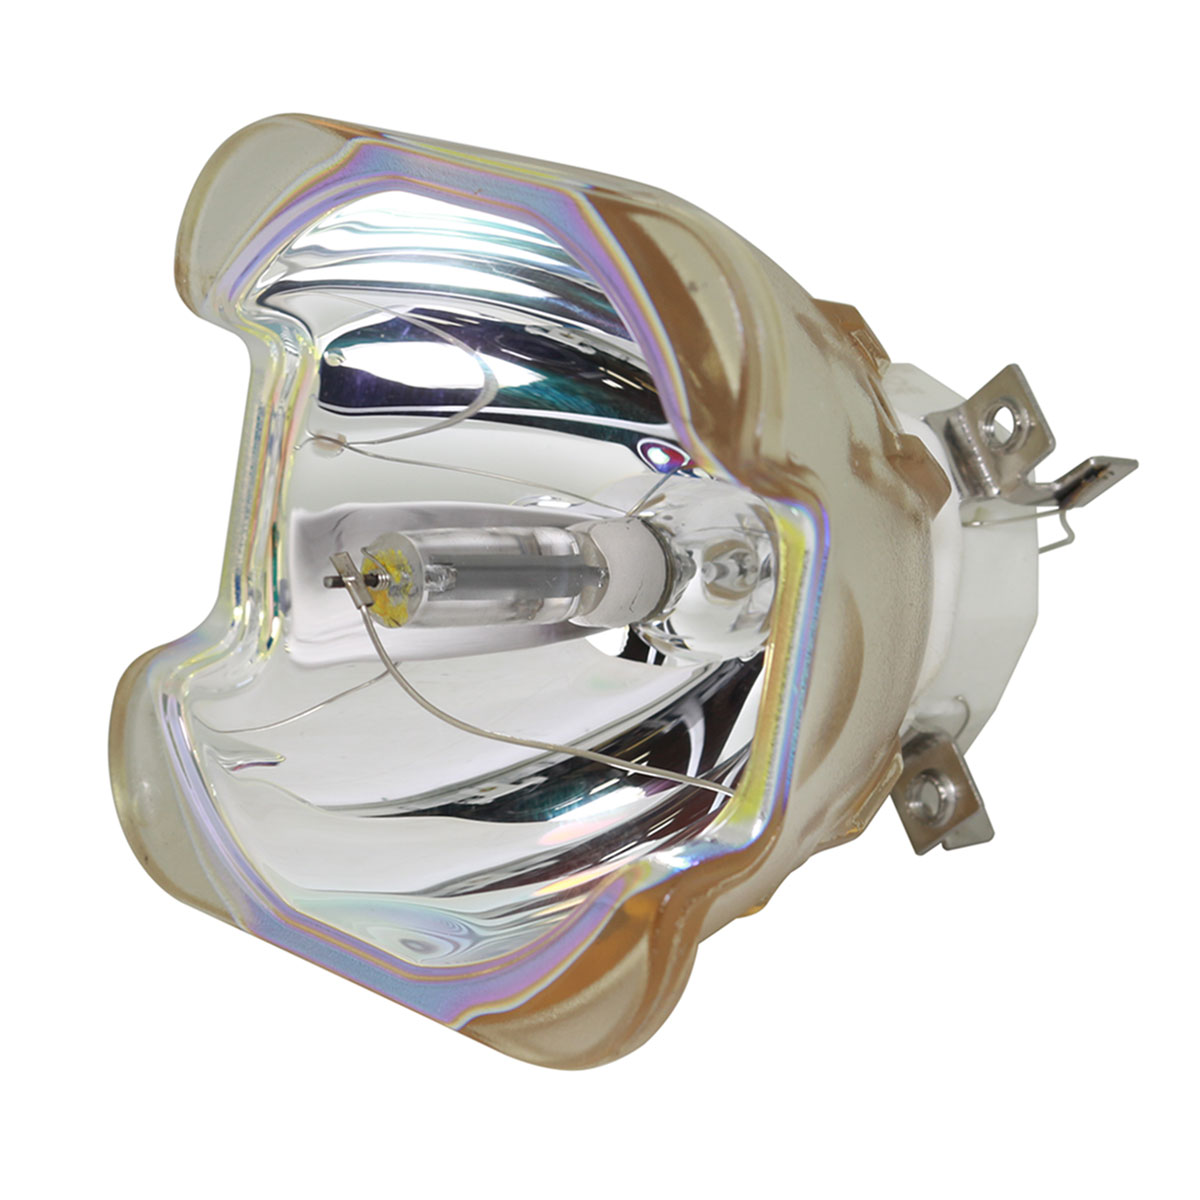 Canon Genuine AL™ 2406C001 Lamp (Bulb Only) for Canon Projectors - 90 Day Warranty